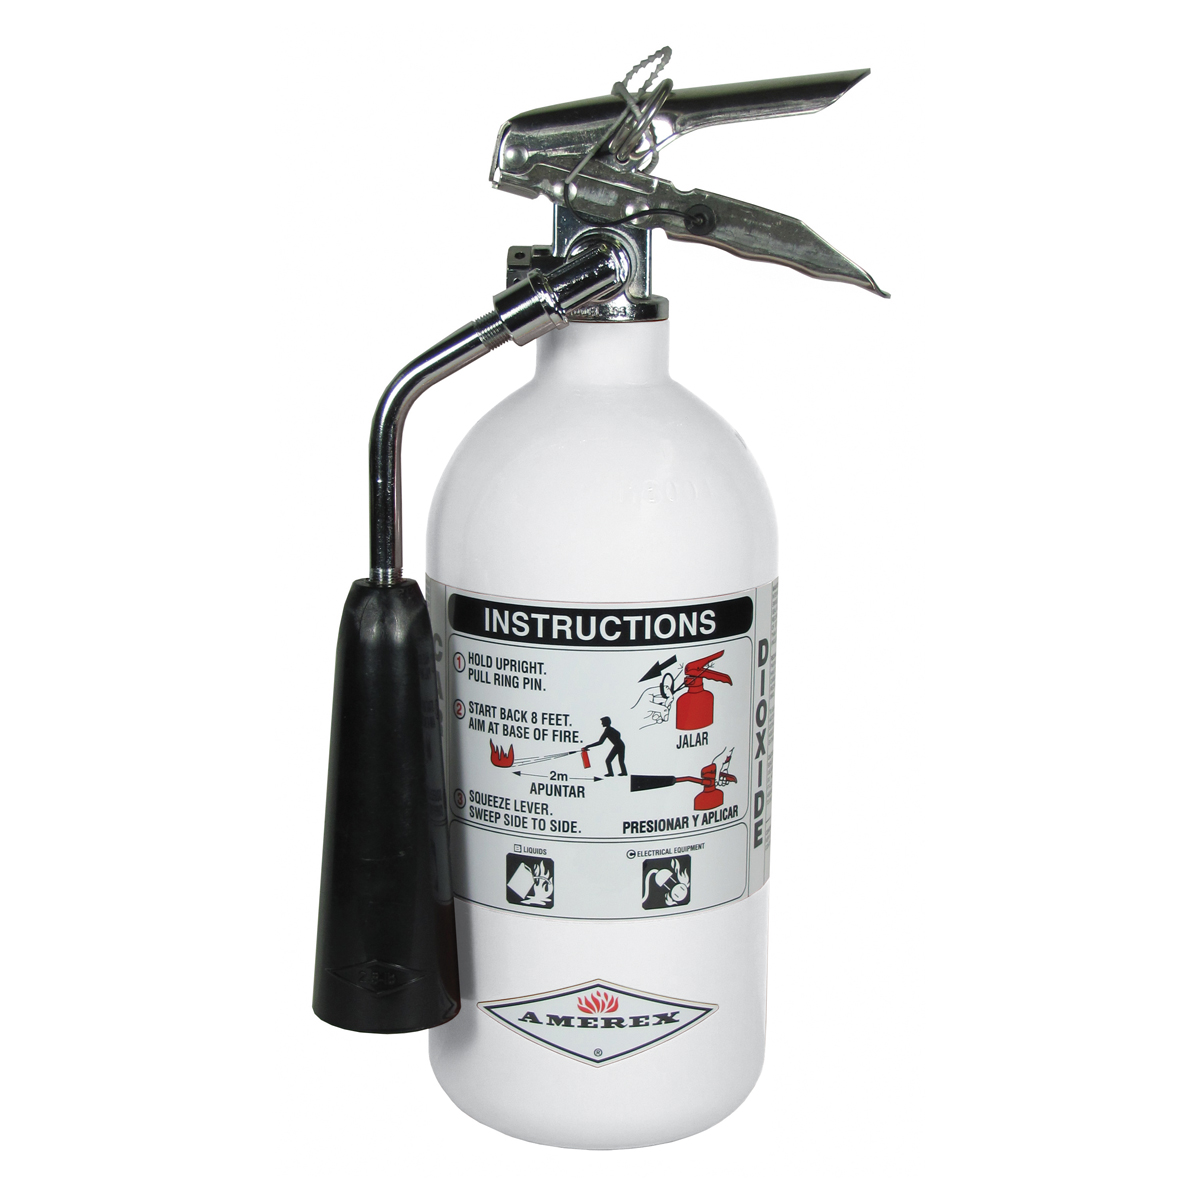 MR Conditional Carbon Dioxide Extinguisher